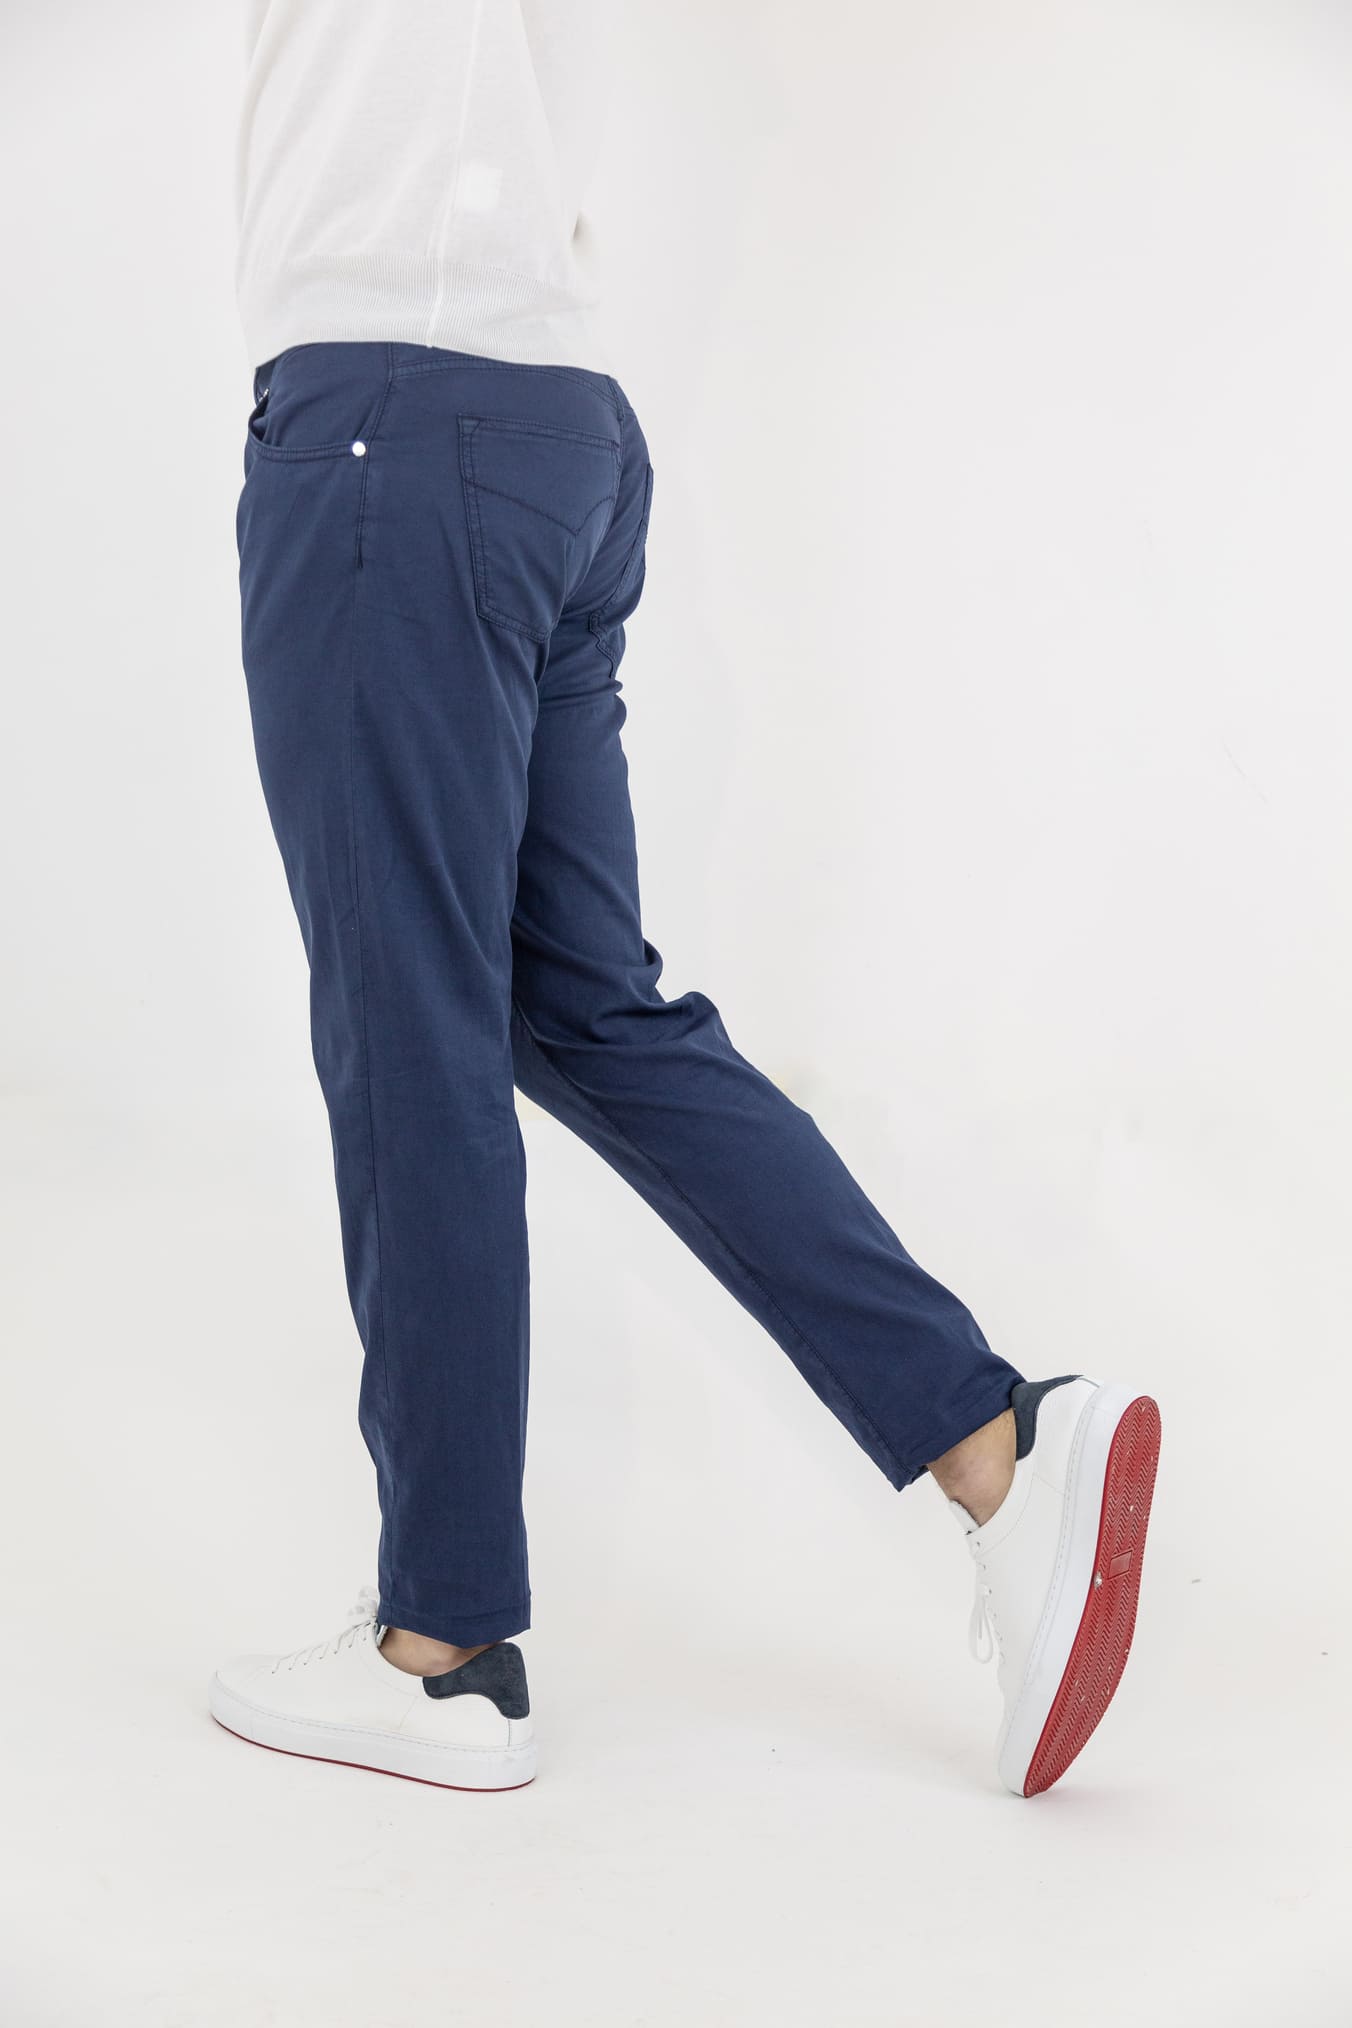 PESCAROLO Pantaloni 5 Tasche mod. Nerano Cotone Seta Blu Navy